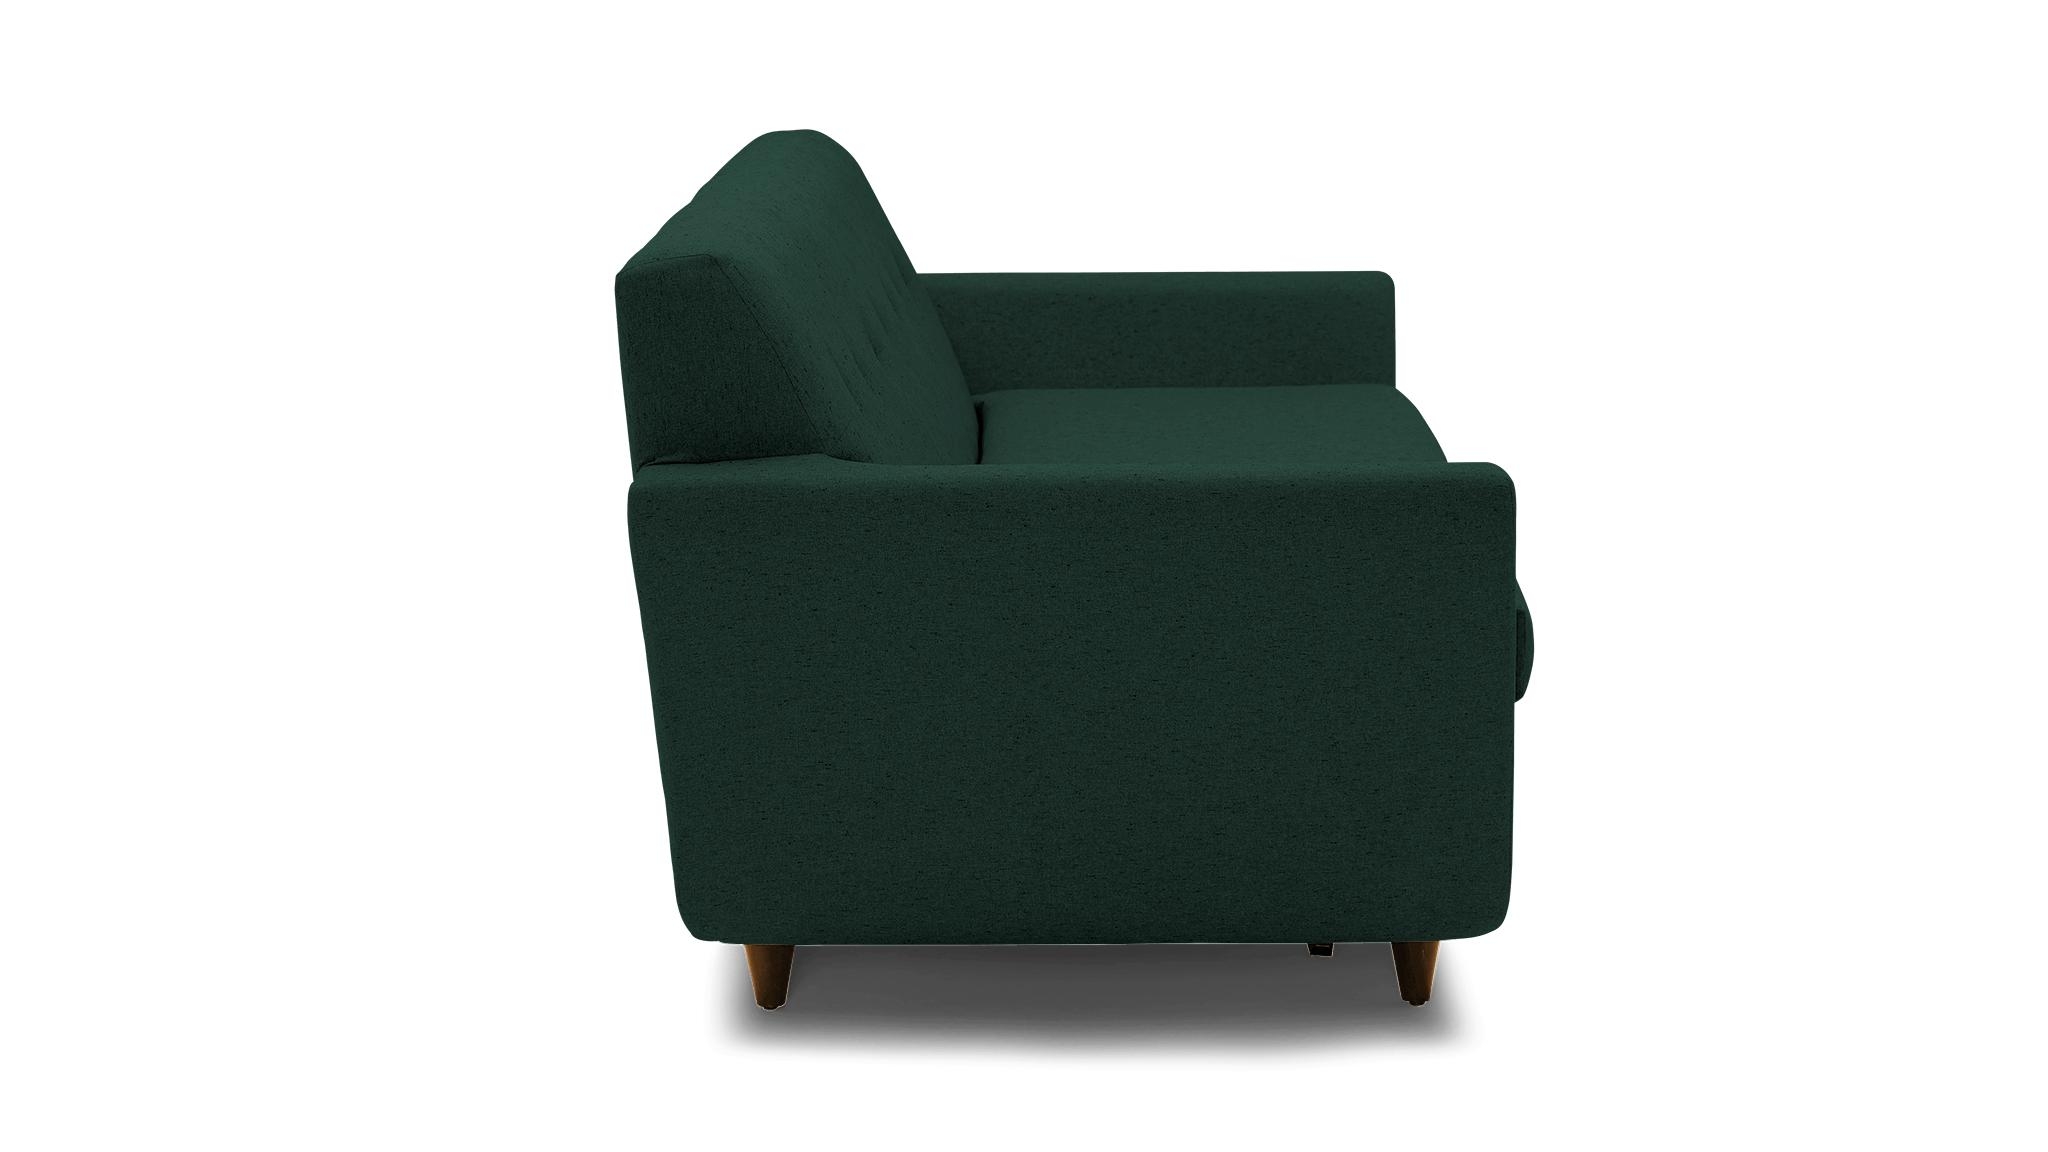 Green Hughes Mid Century Modern Sleeper Sofa - Royale Evergreen - Mocha - Image 2